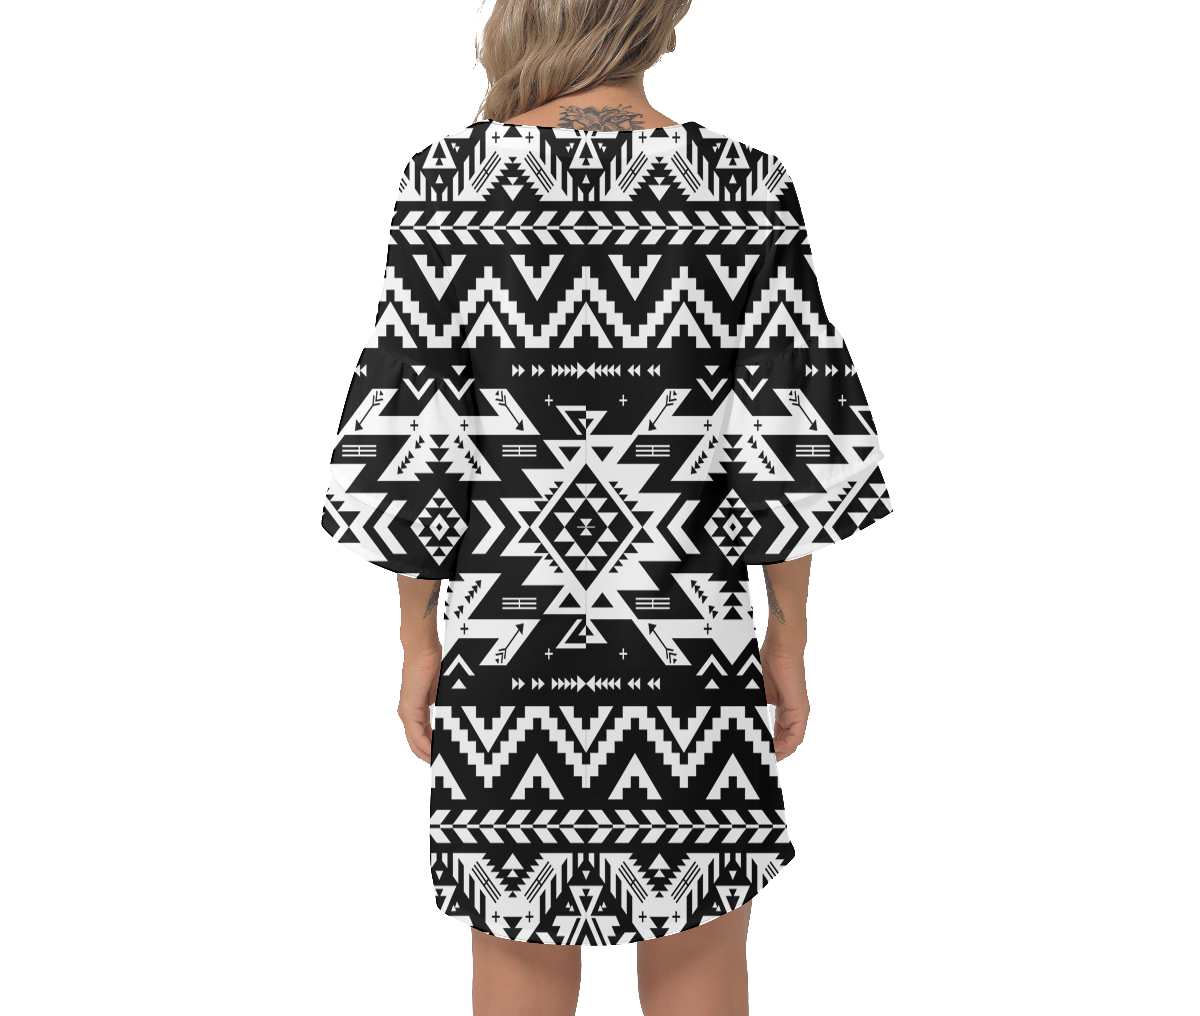 Powwow Storegb nat00441 native design print womens v neck dresss